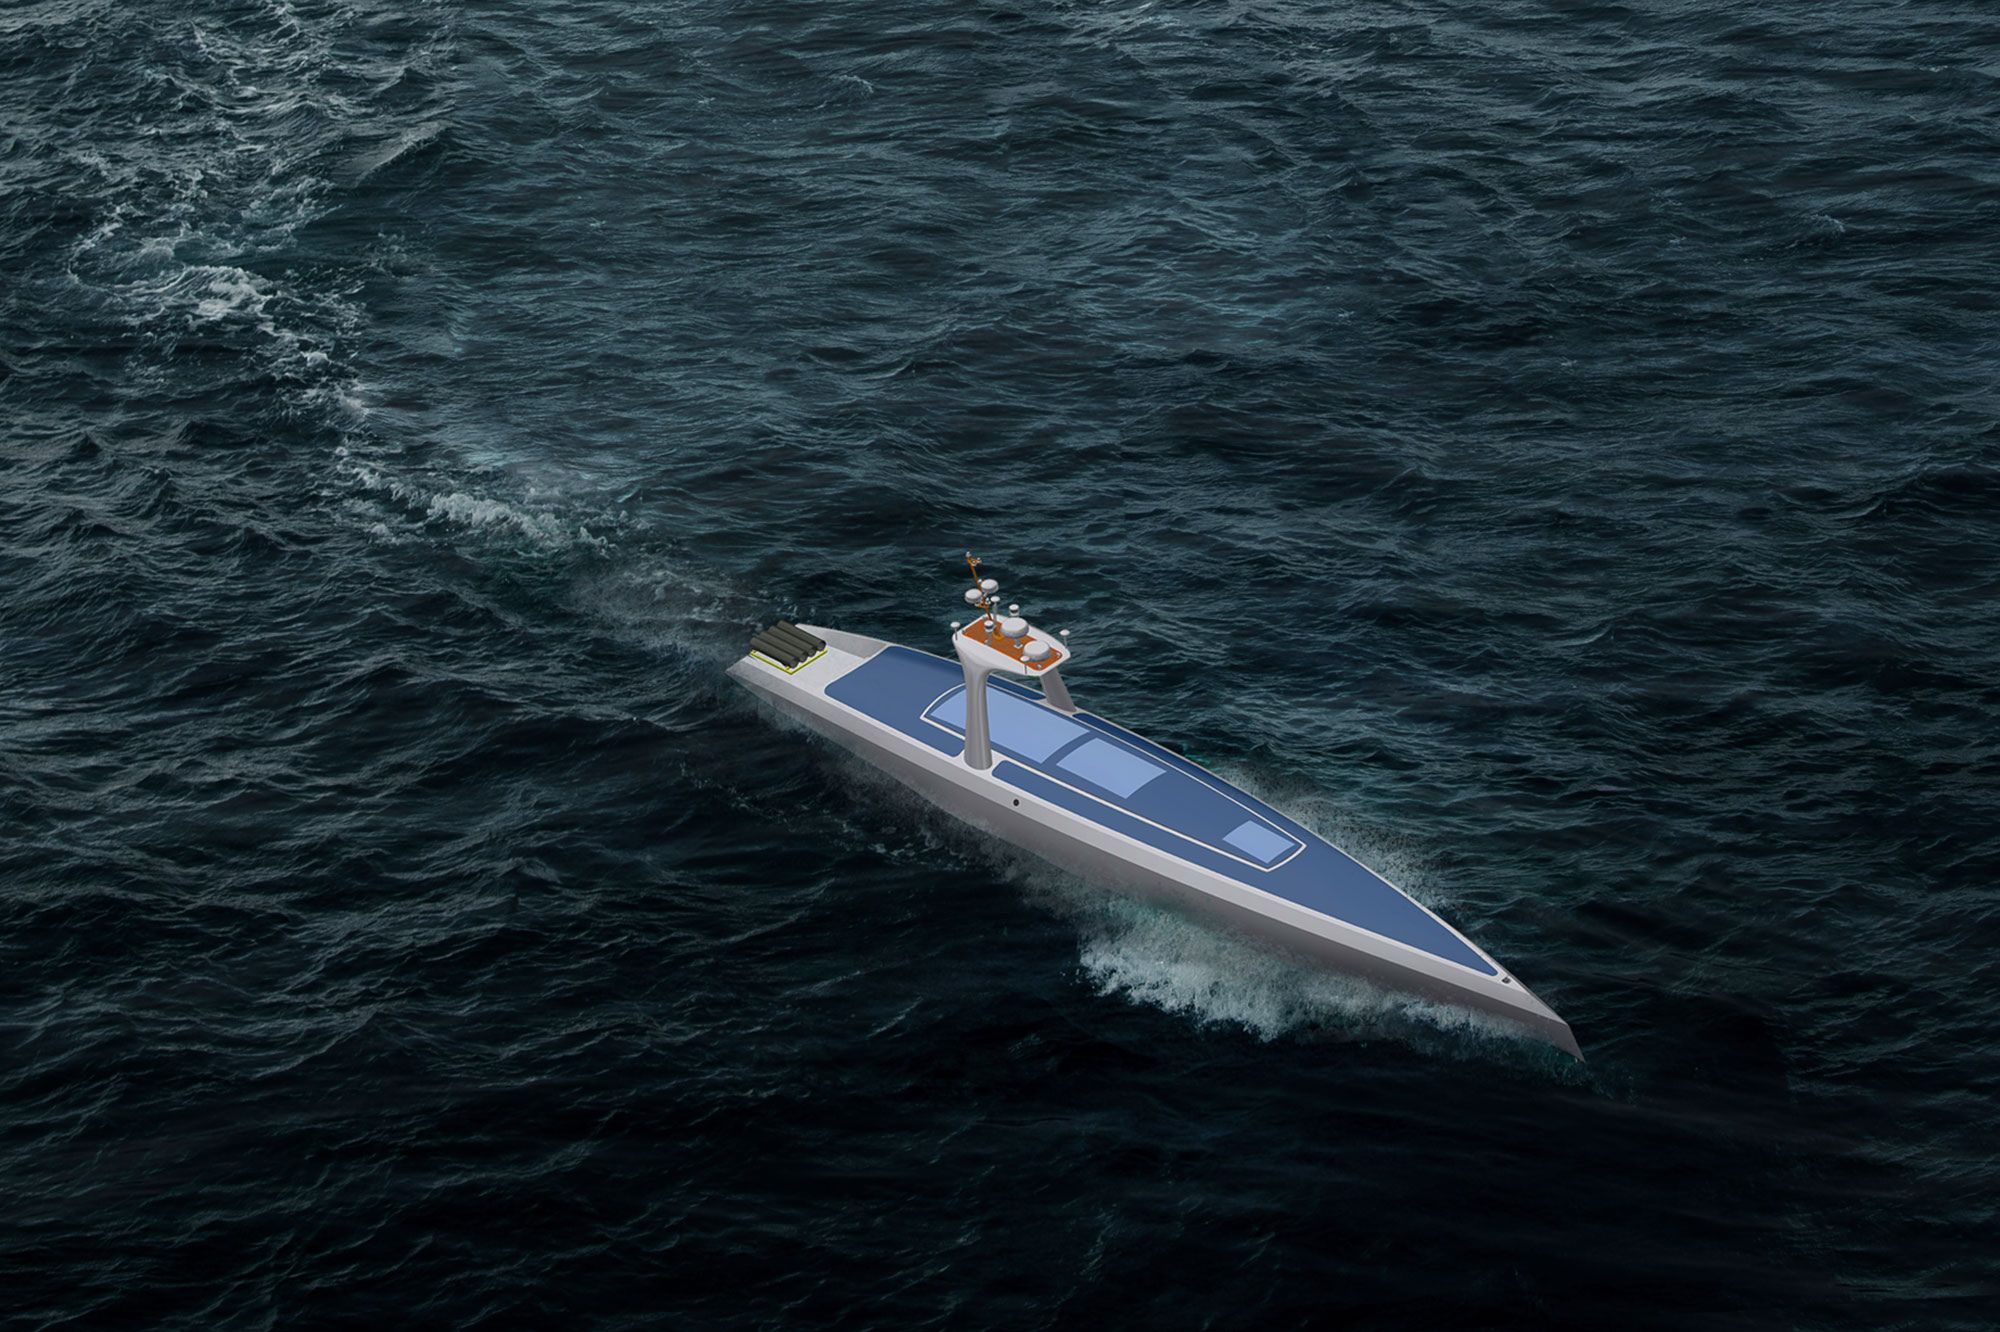 Artists impression of Oceanus - the world’s first long-range autonomous research vessel